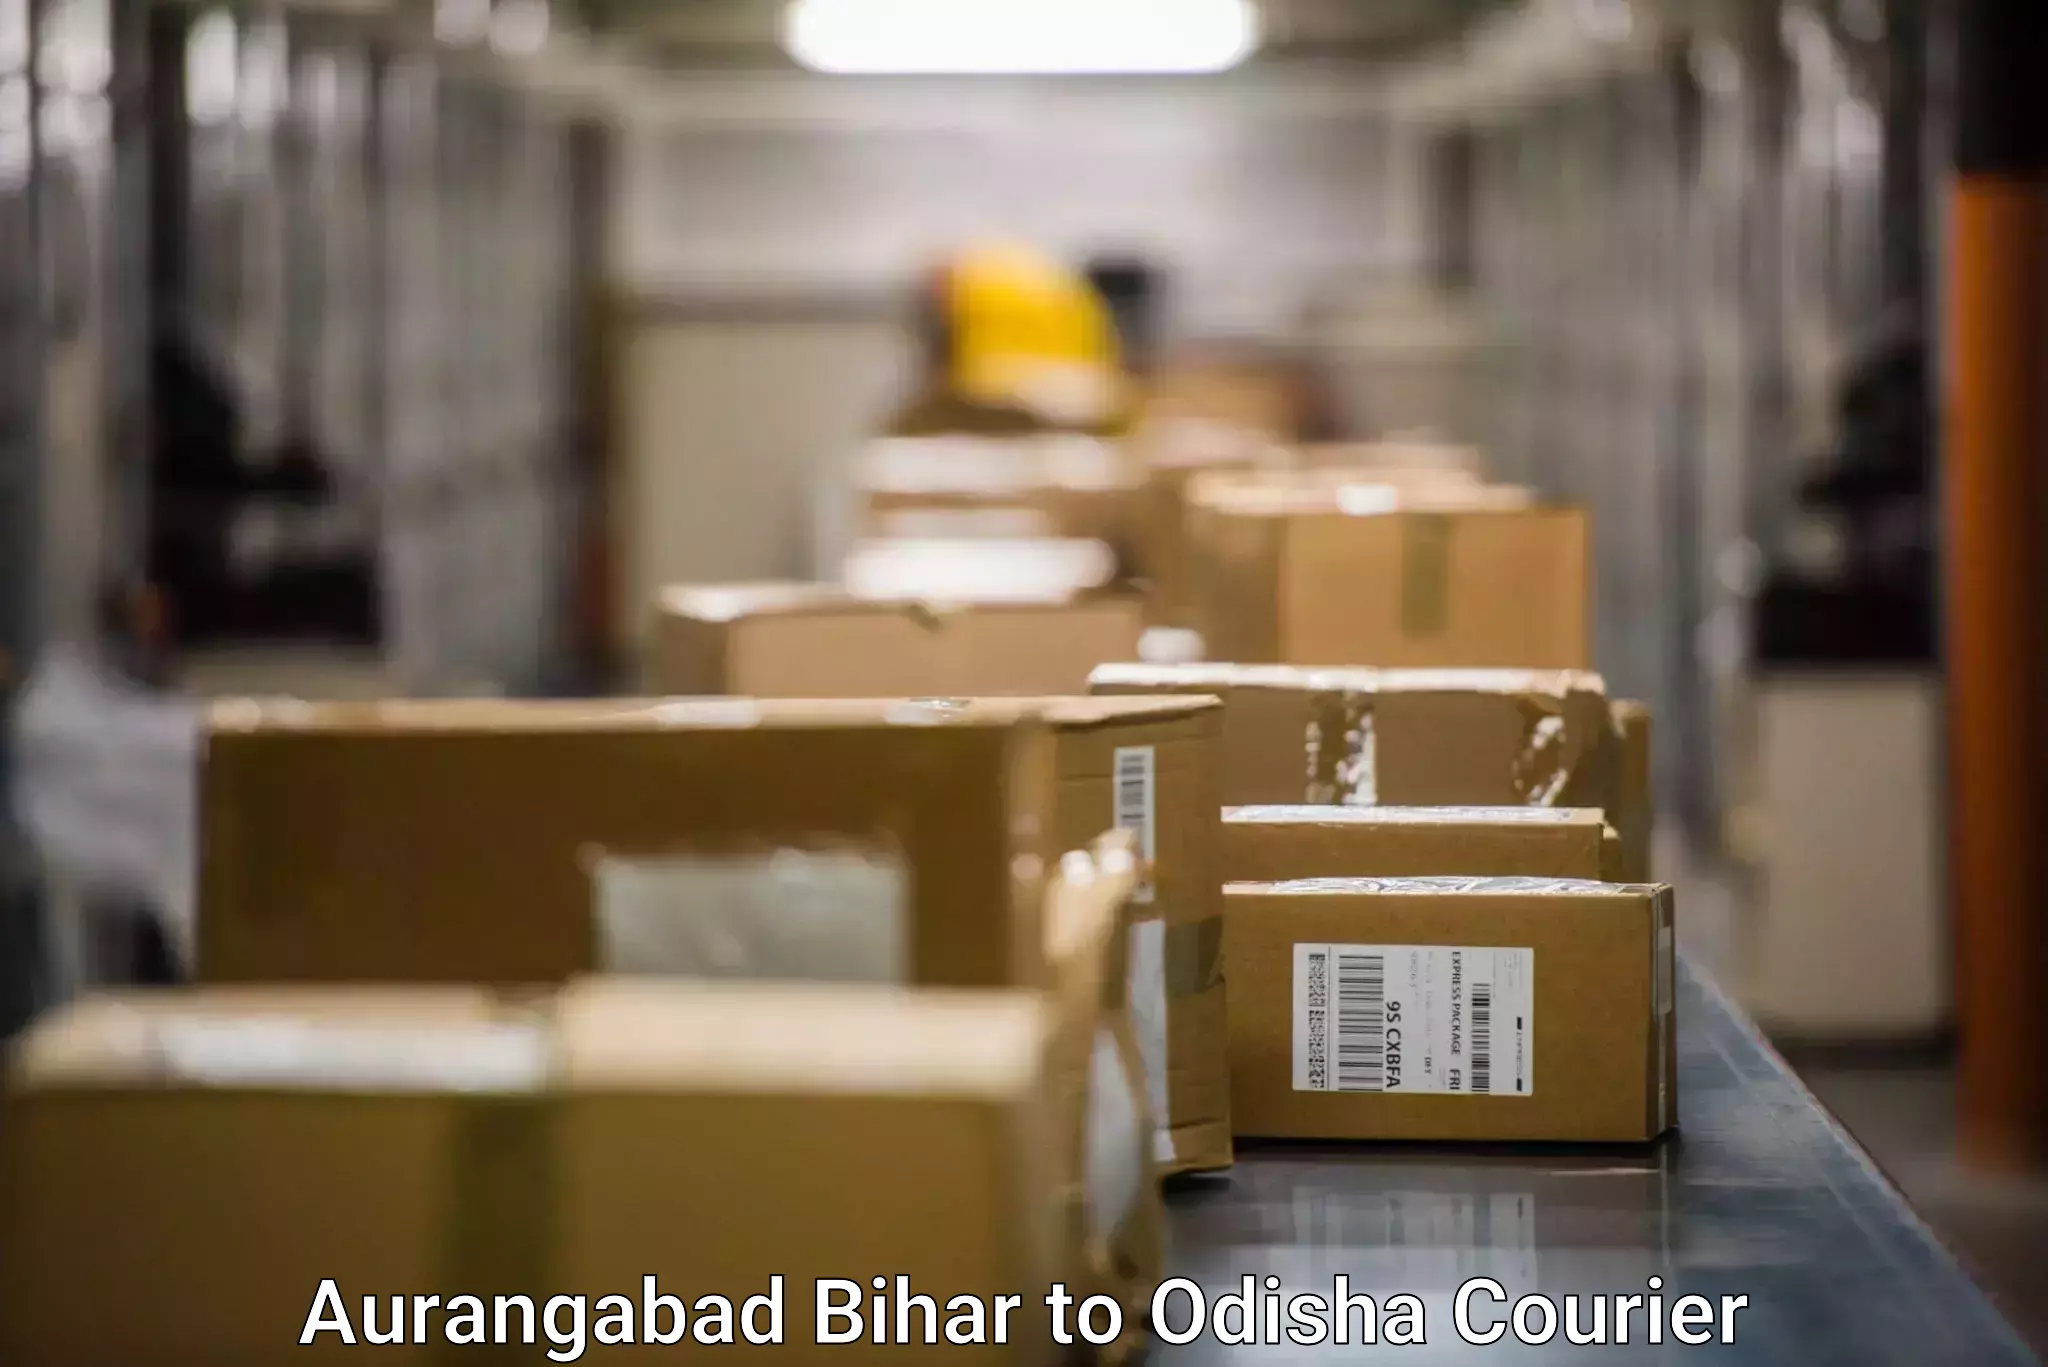 Large-scale shipping solutions Aurangabad Bihar to Odisha